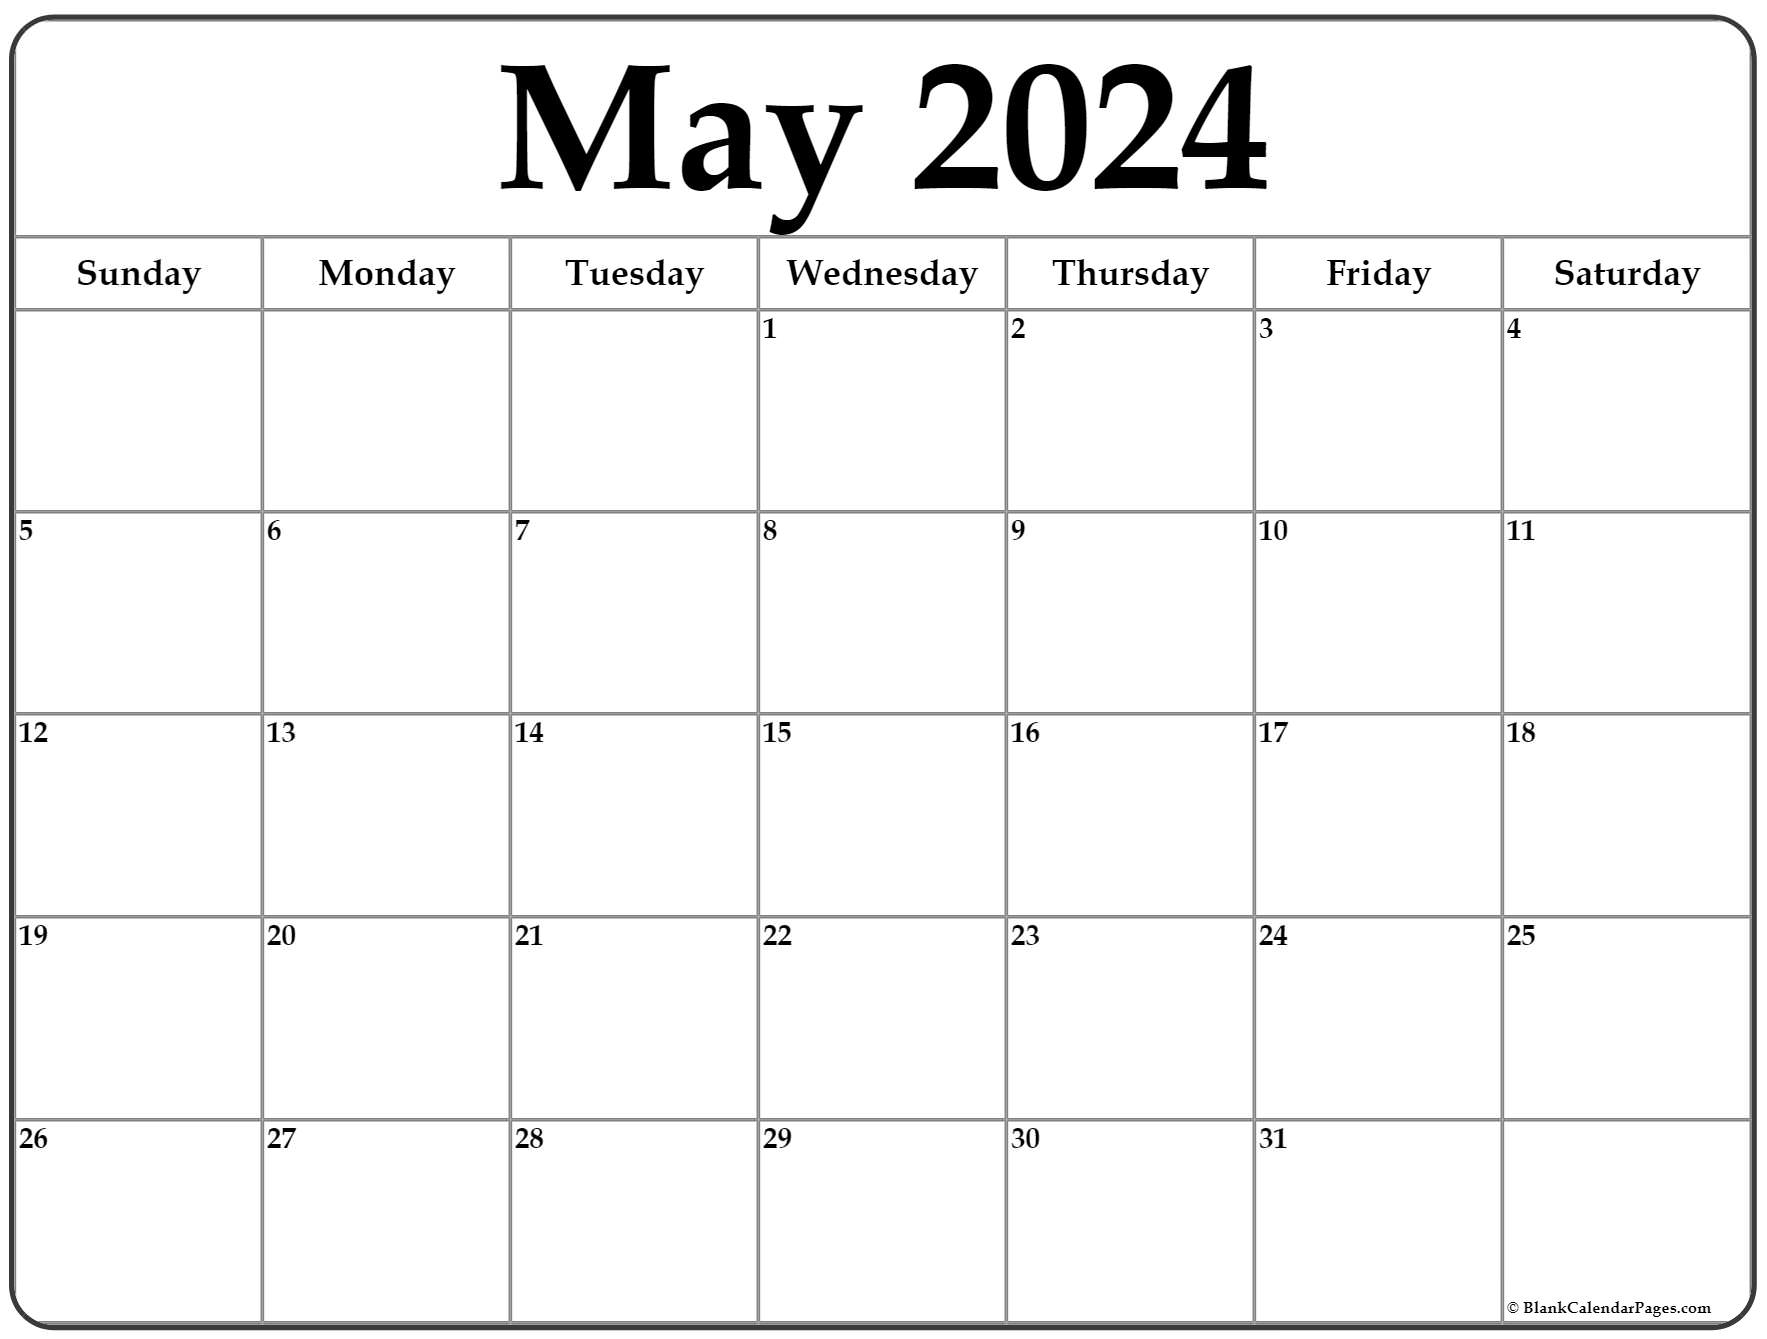 May 2024 Calendar | Free Printable Calendar for Free Calendar May 2024 Printable